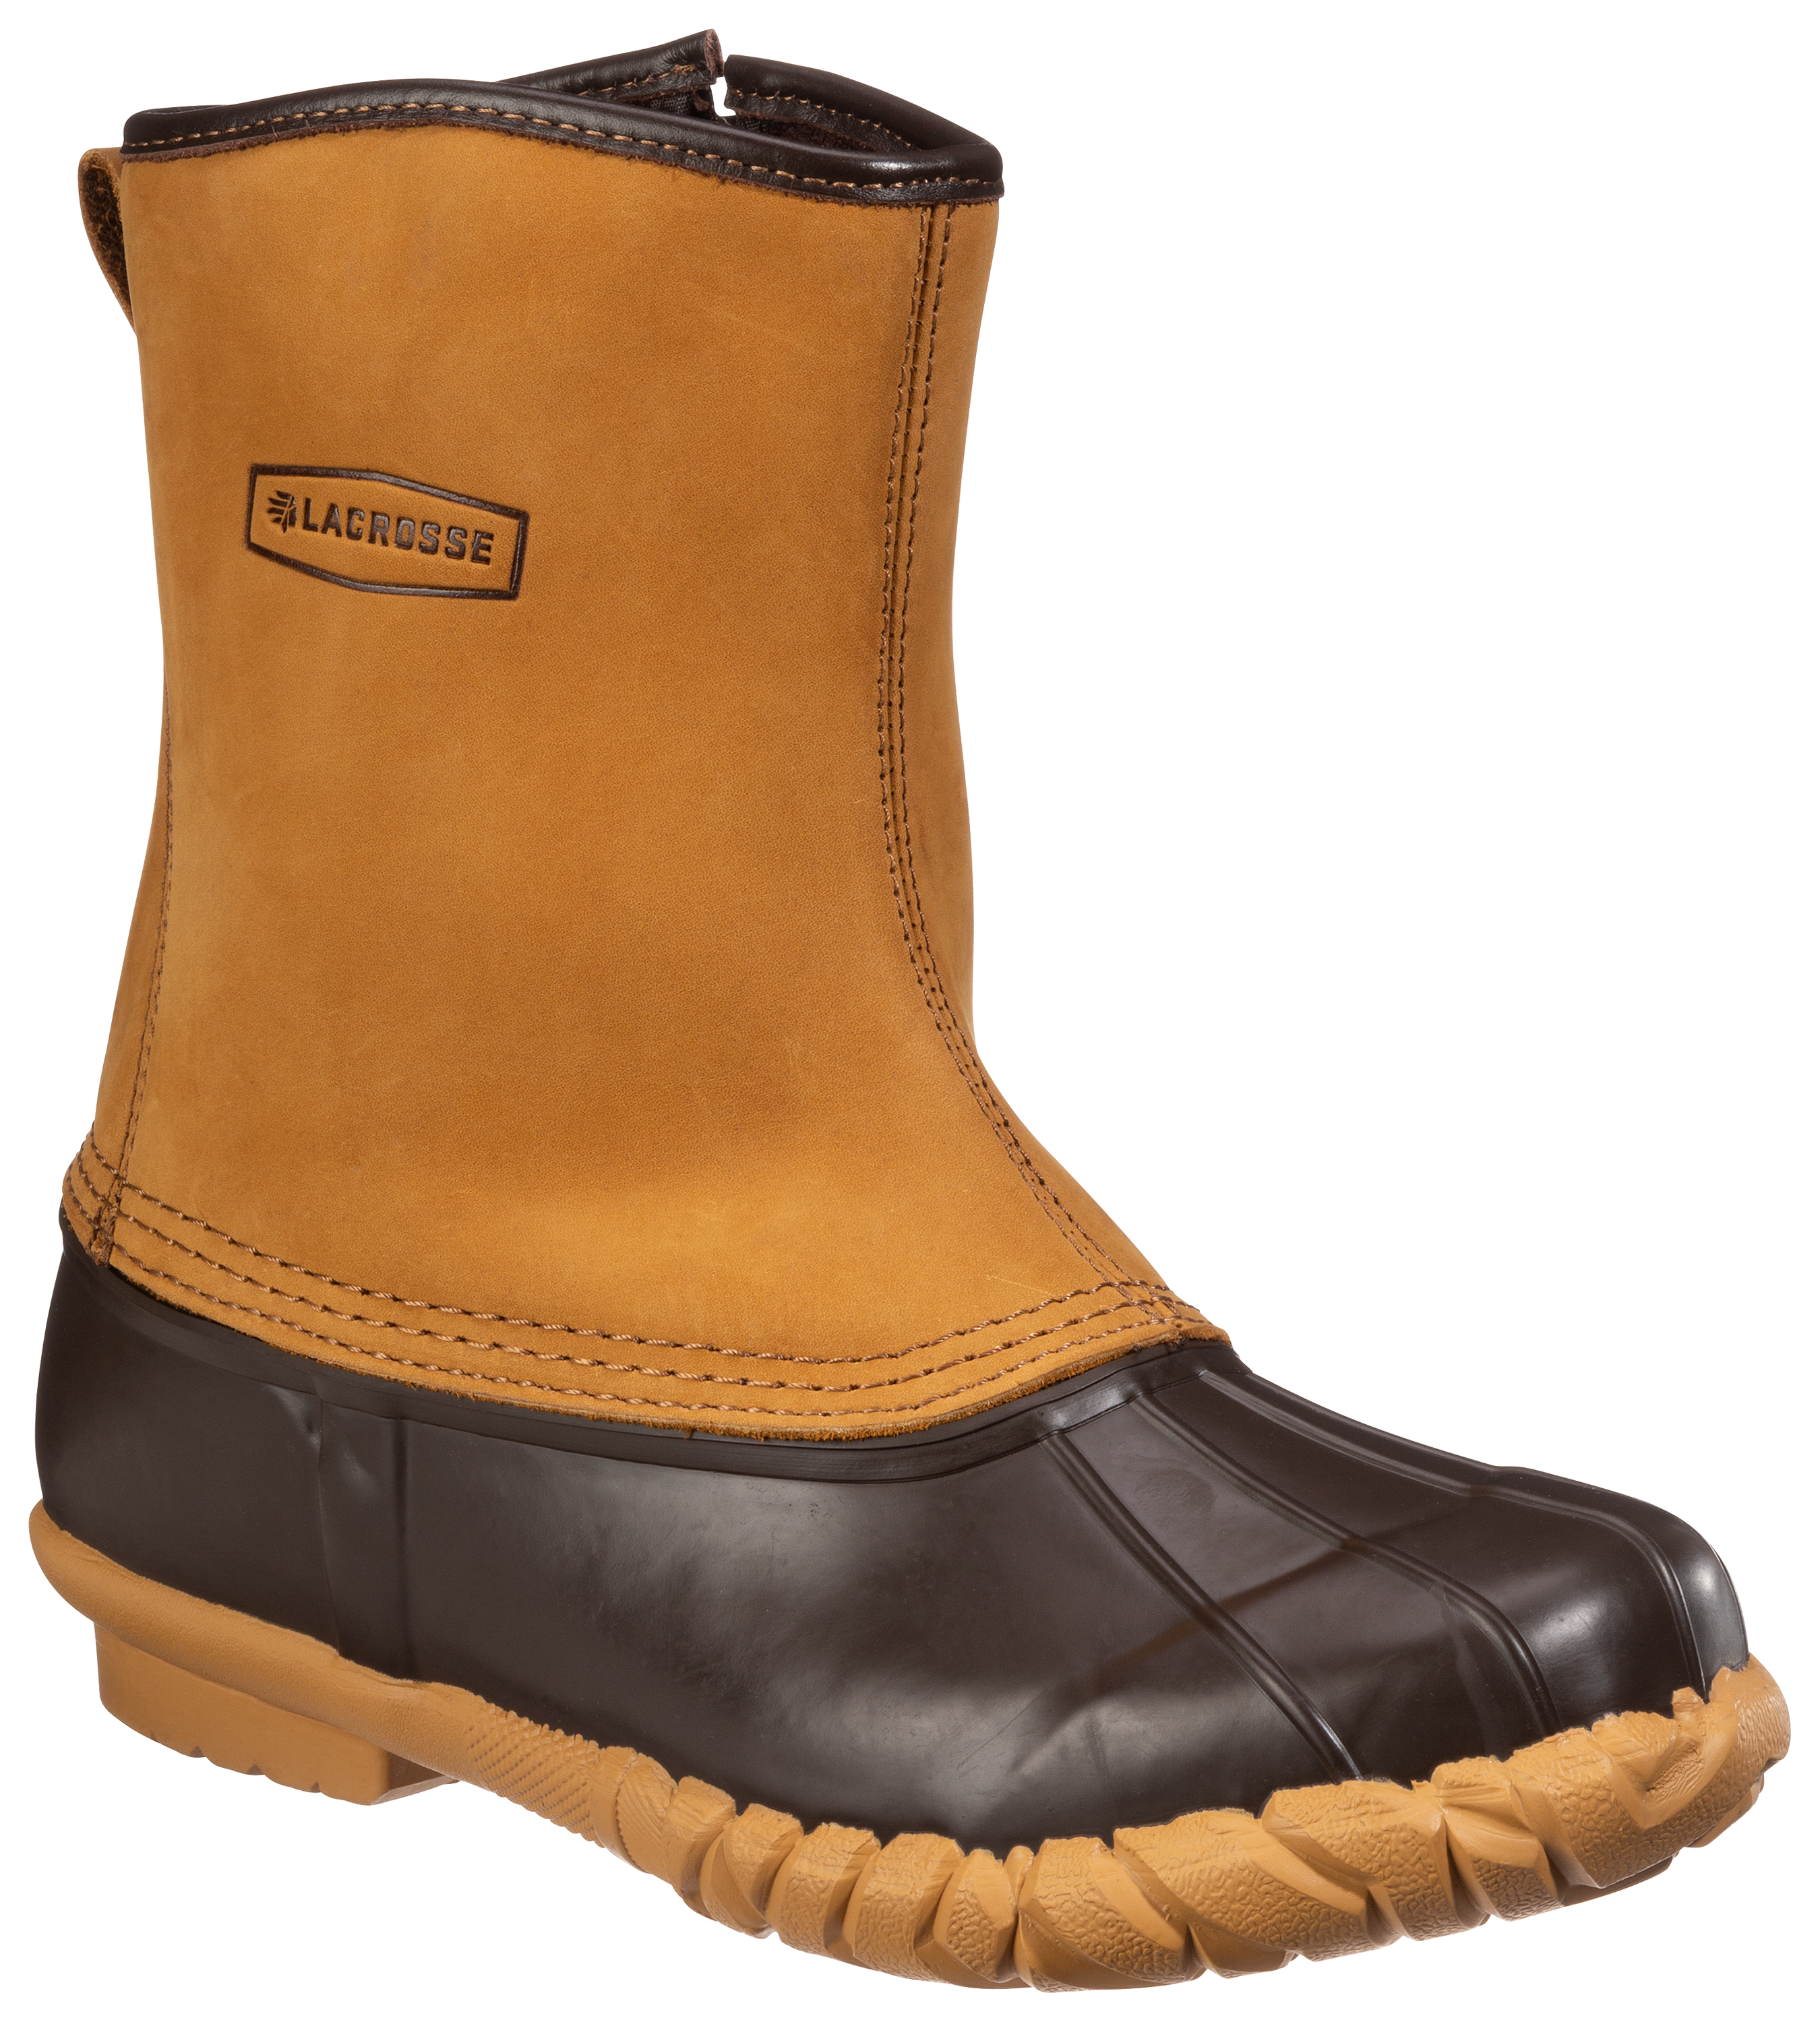 LaCrosse Mesquite II Insulated Waterproof Side-Zip Boots for Men - Brown - 7M